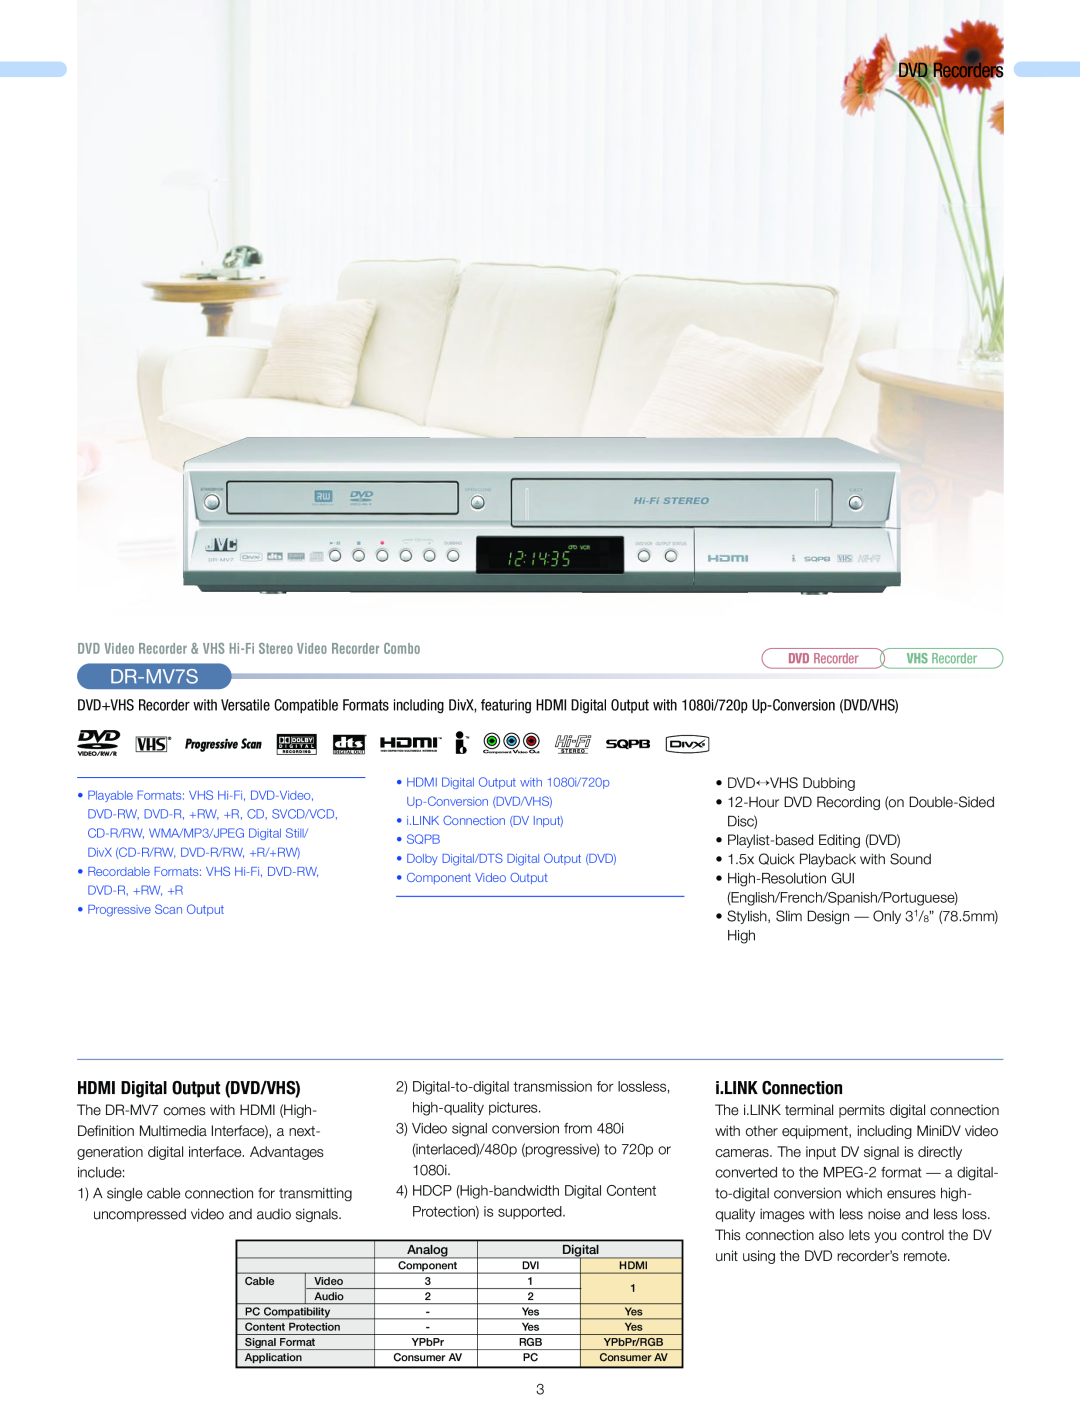 JVC 2006 manual DR-MV7S, HDMI Digital Output DVD/VHS, i.LINK Connection, DVD Recorders 